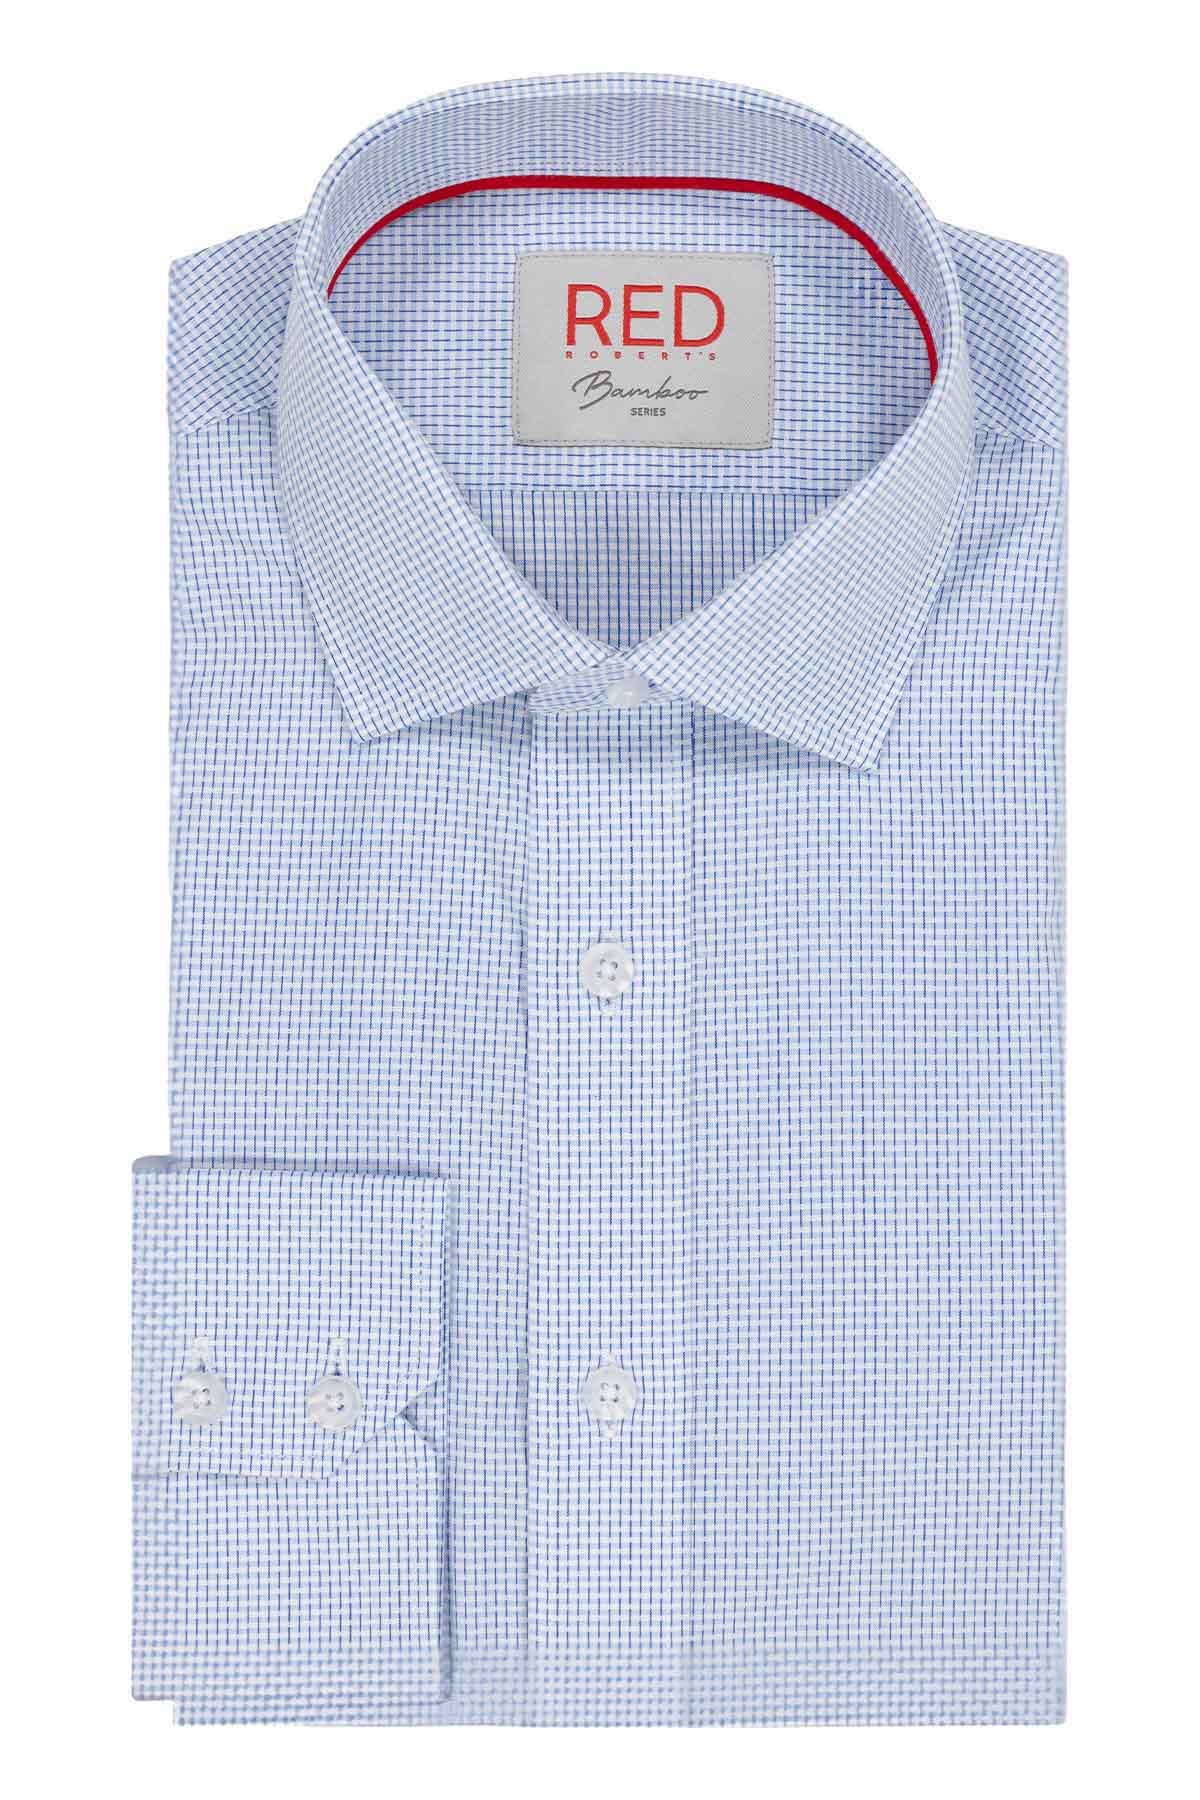 Camisa Vestir Roberts Red Blanco Slim Fit